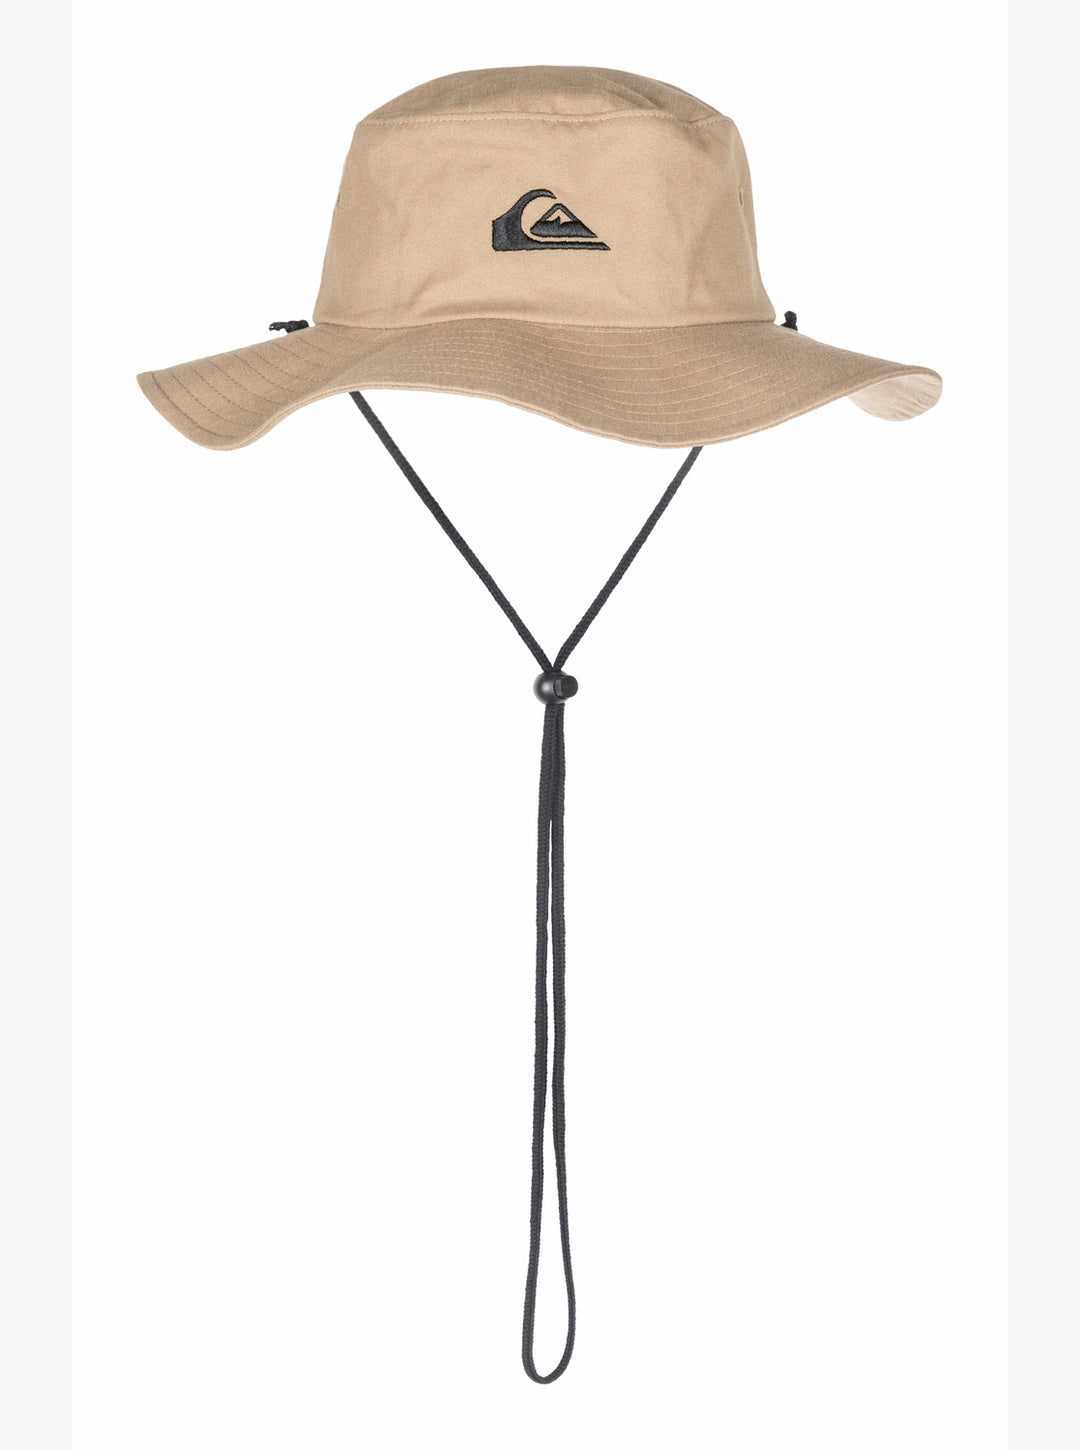 Quiksilver Bushmaster Safari Boonie Hat - Khaki - Sun Diego Boardshop